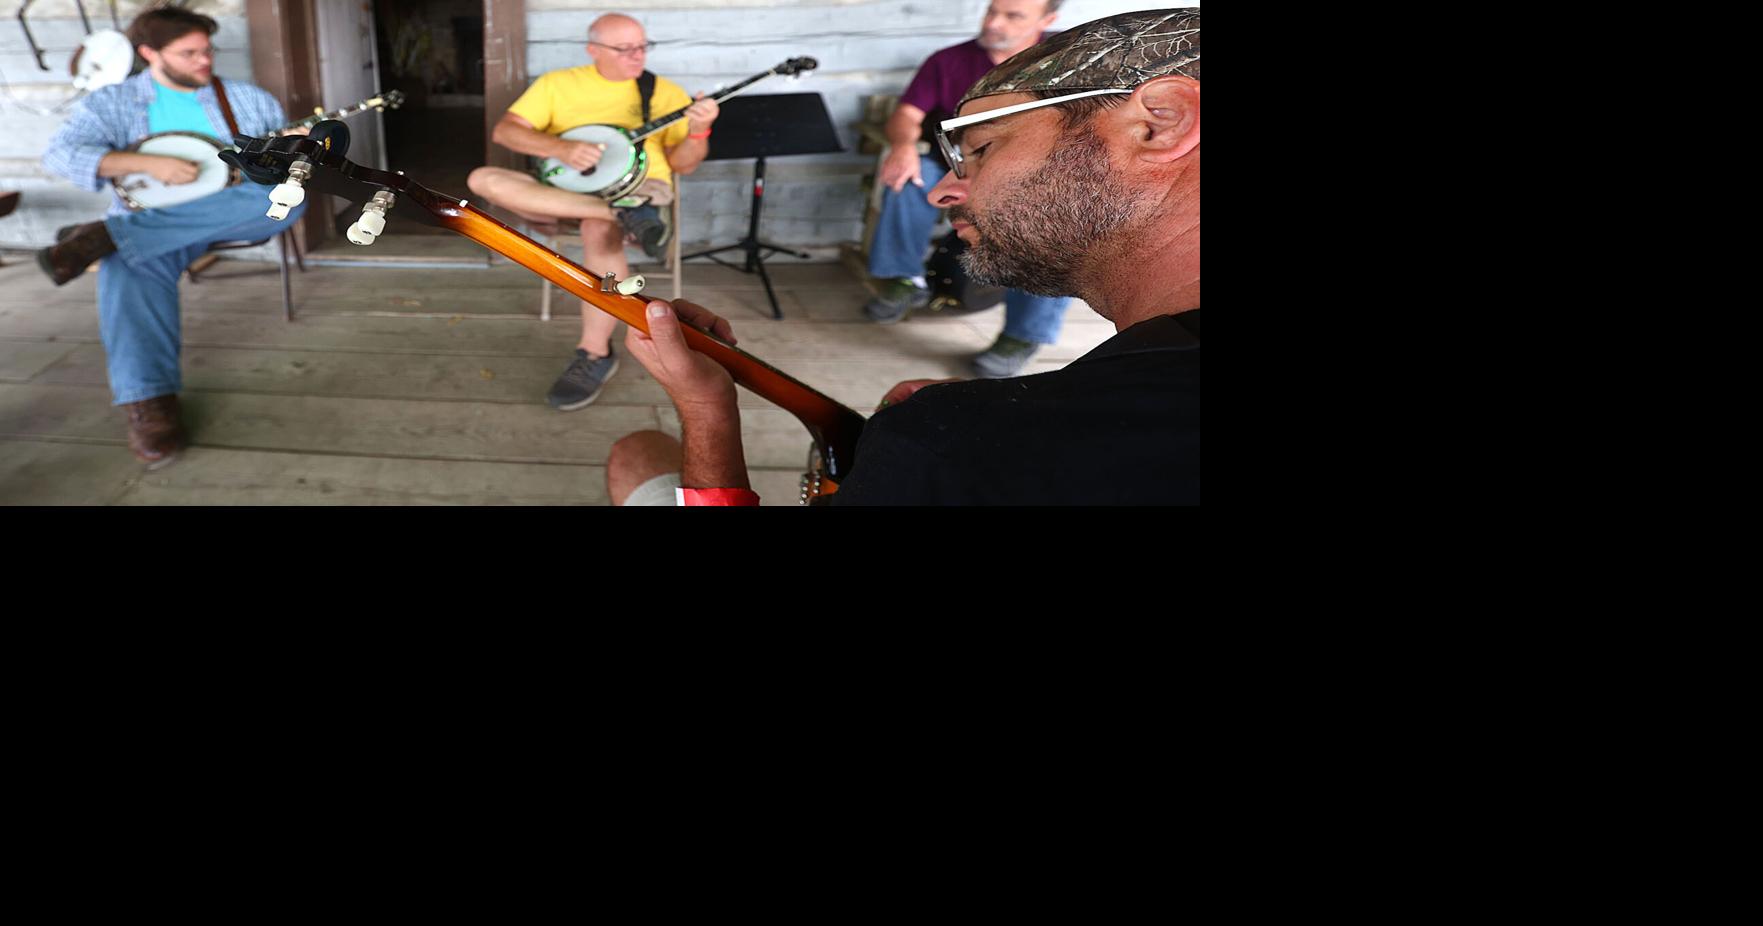 Banjo Workshop At Winding Creek Festival Brings Out Dedicated